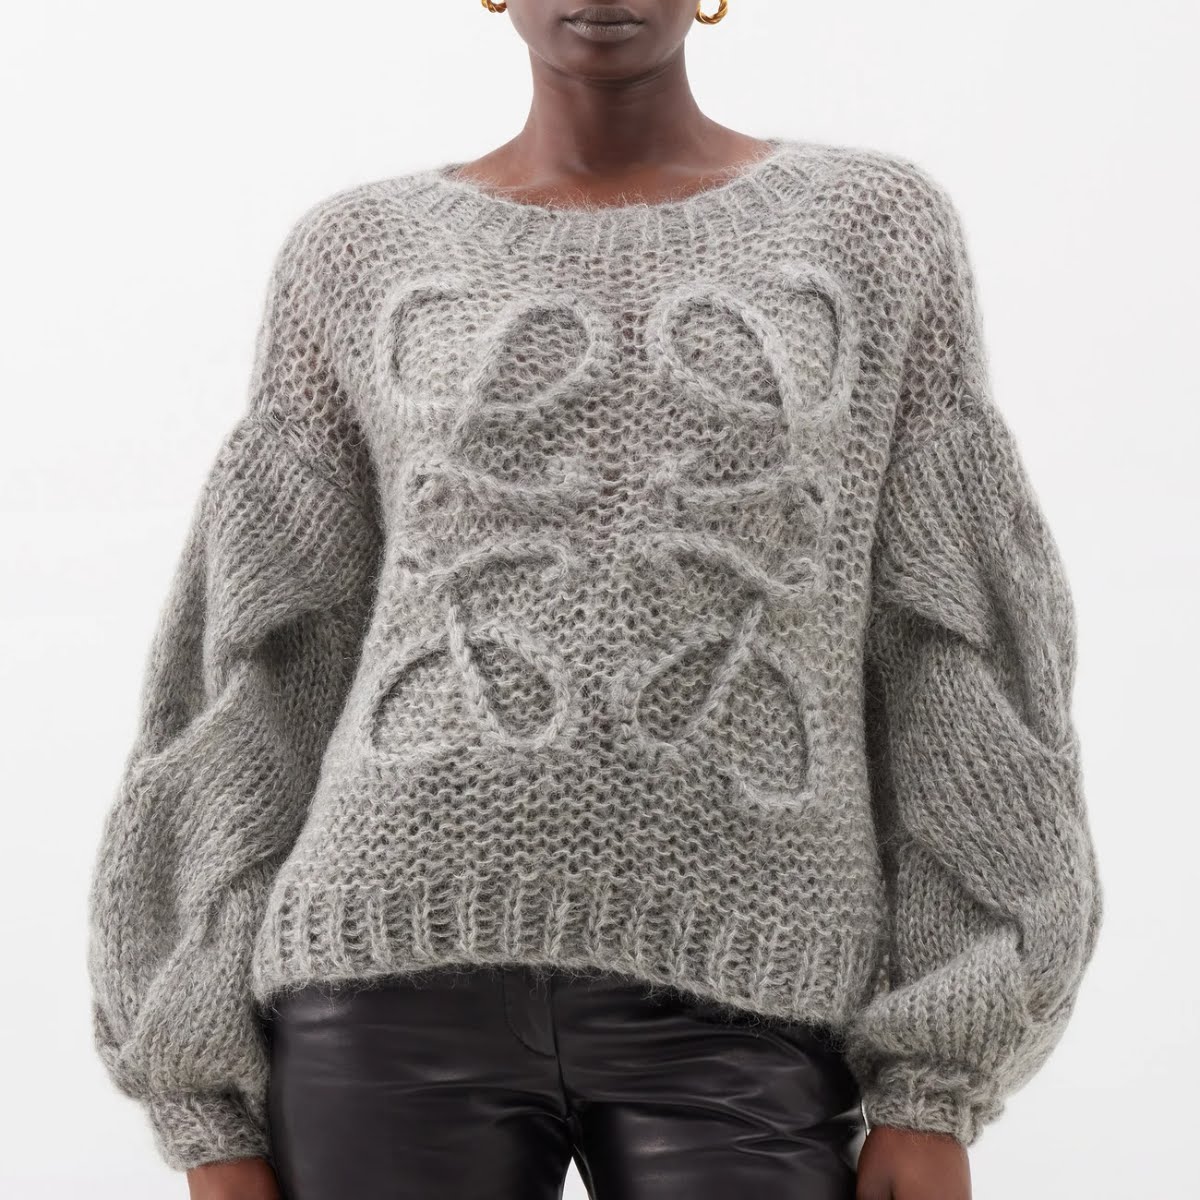 Loewe Anagram-Logo Mohair-Blend Oversized Sweater, €880